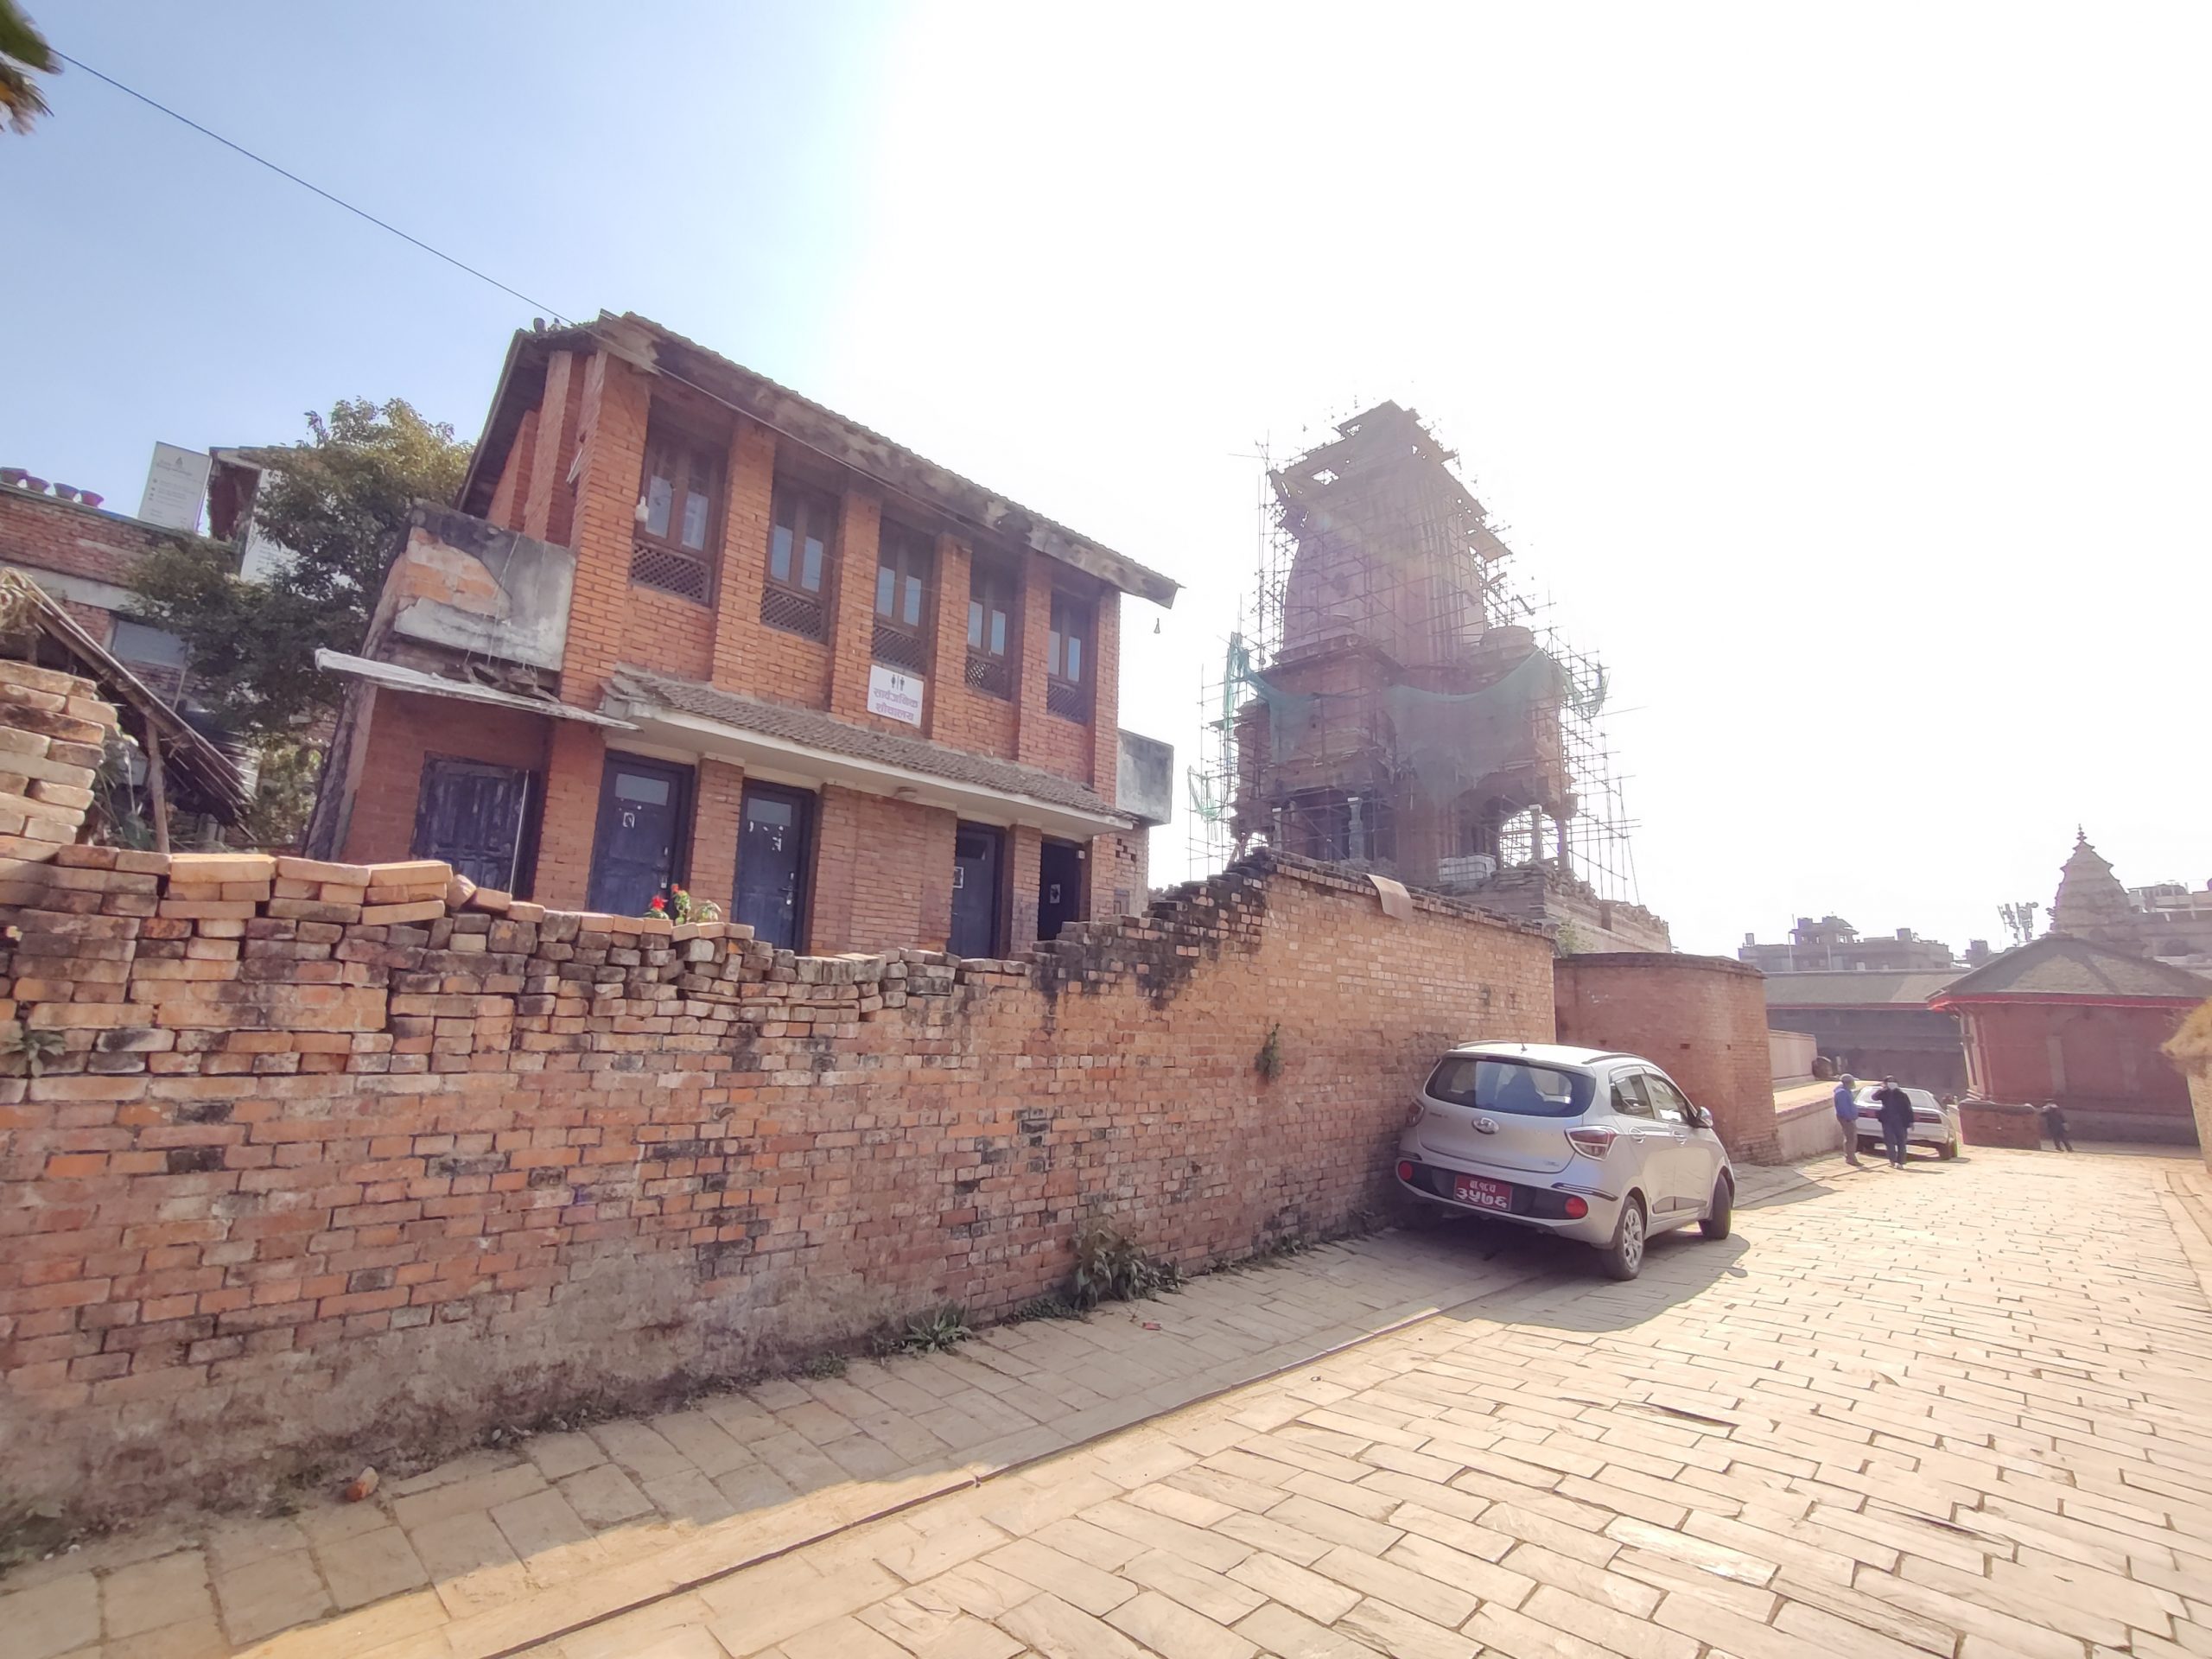 Public Toilet near Bhaktapur Durbar Square image